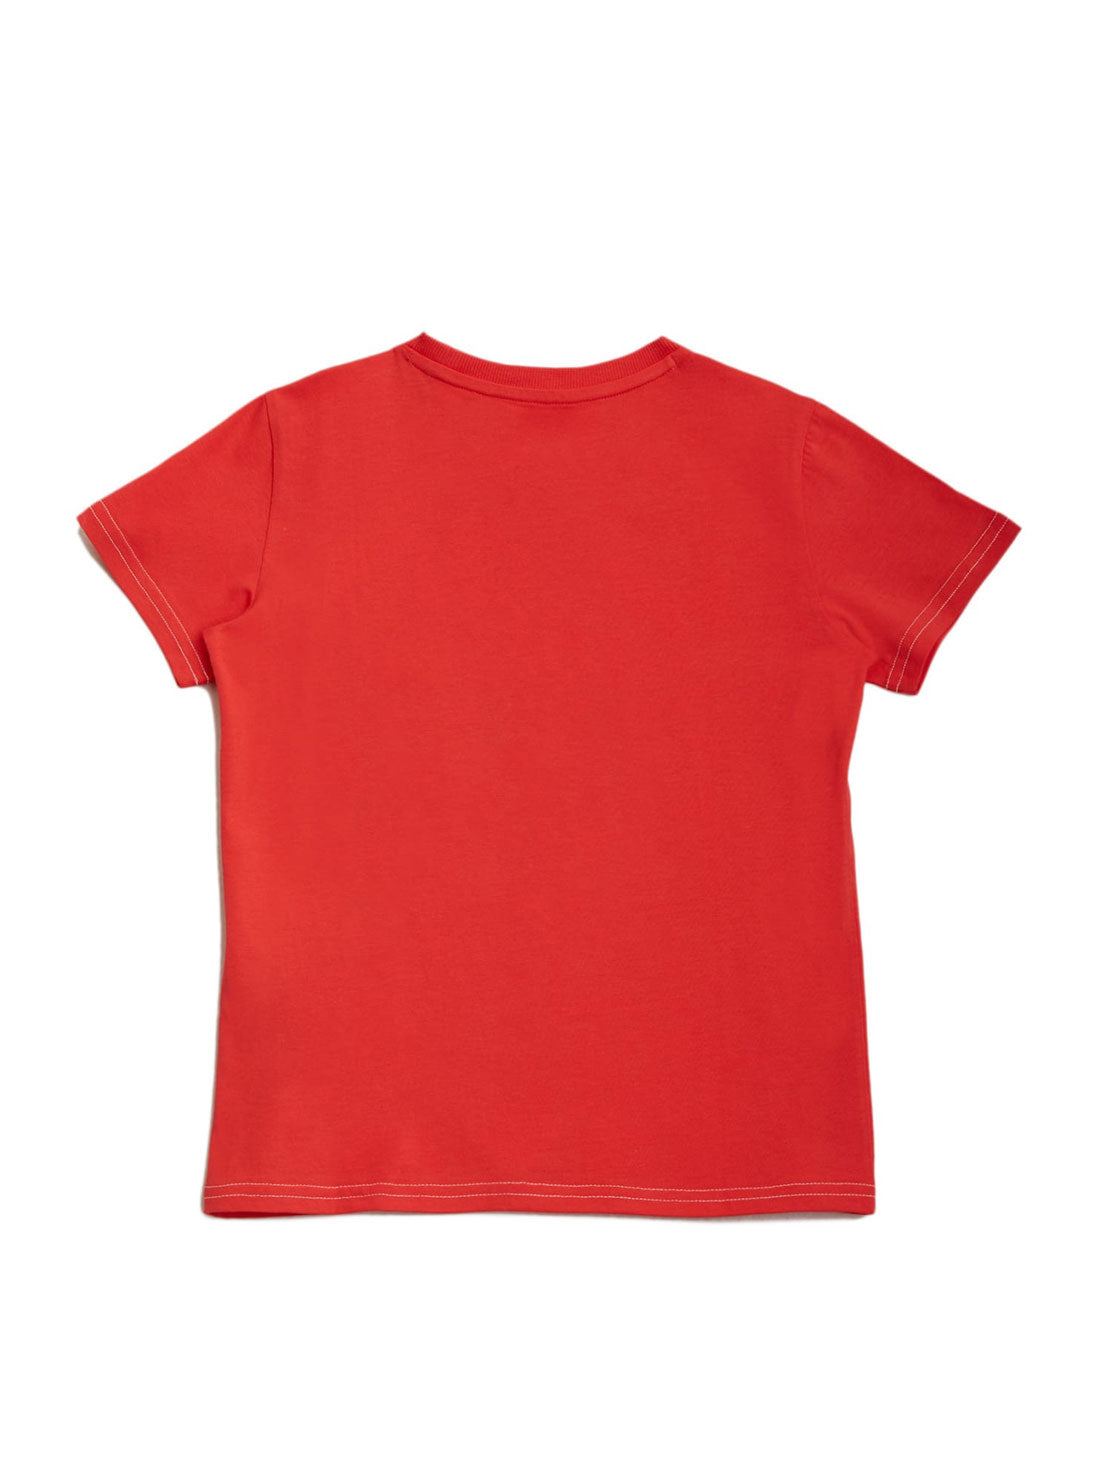 GUESS Kids Big Boy Red True American Tradition T-Shirt (7-16) L2GI00K8HM0 Back View